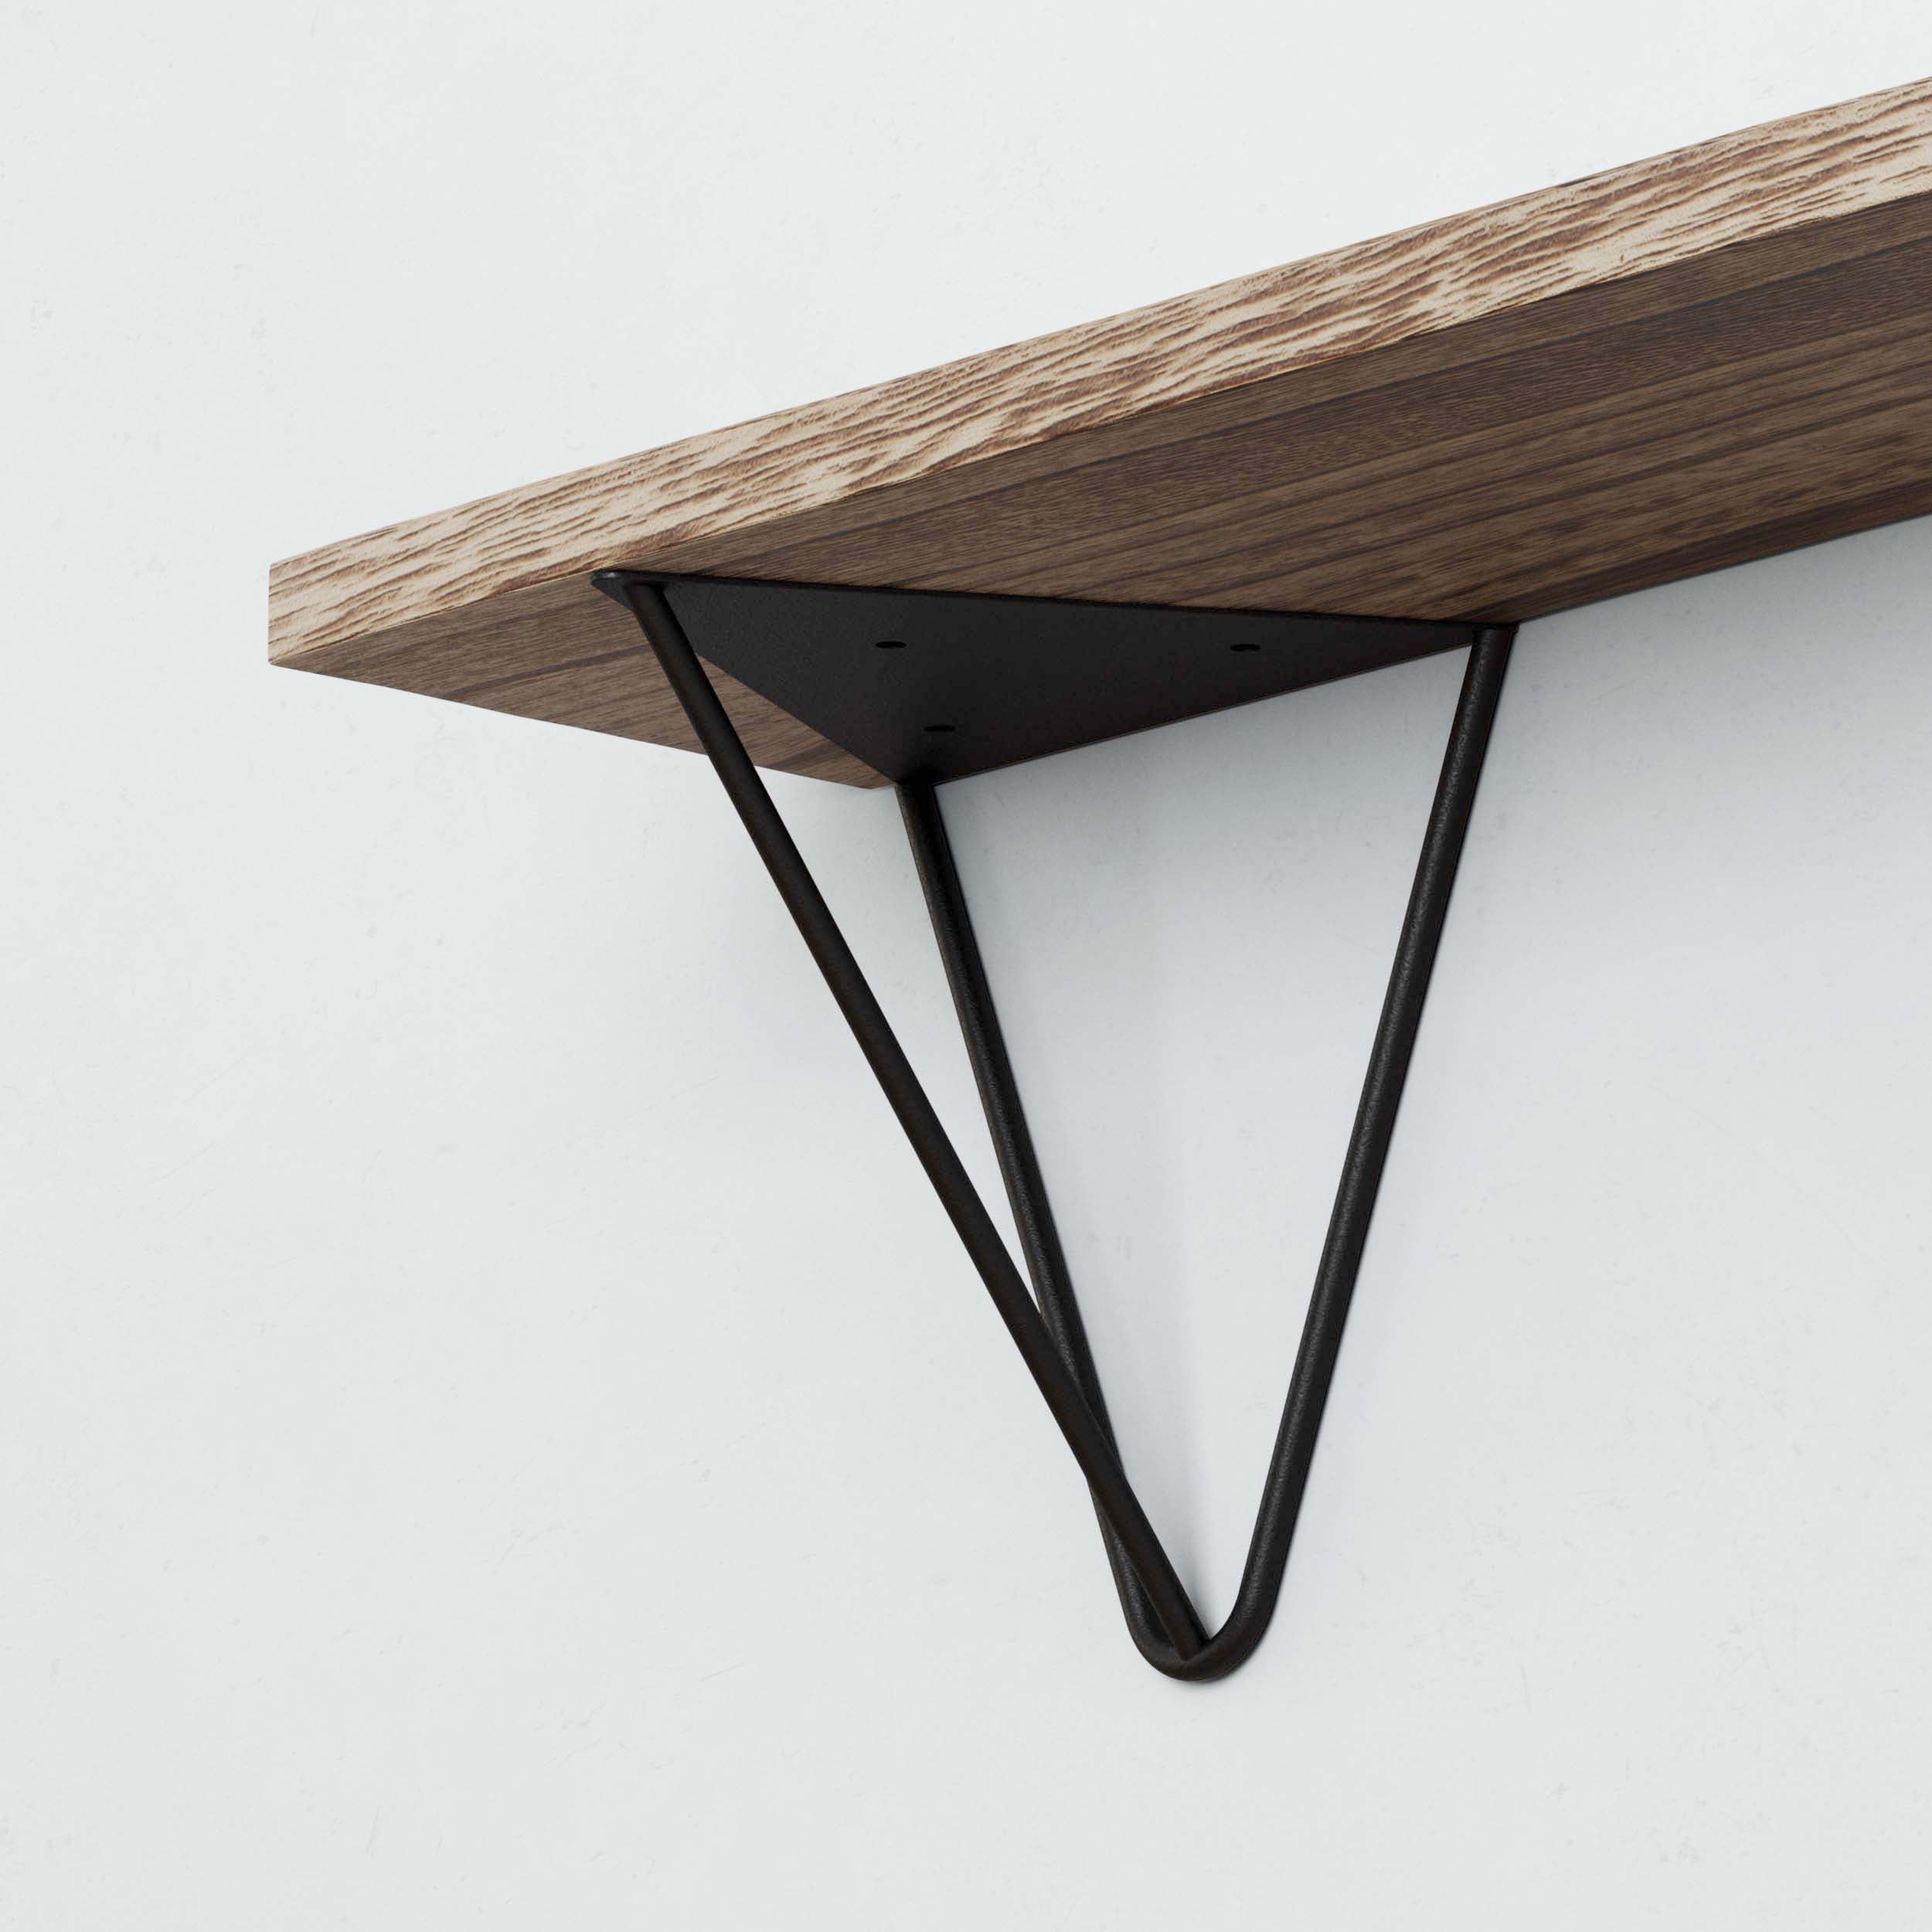 Black triangular shelf bracket supporting a wooden shelf.